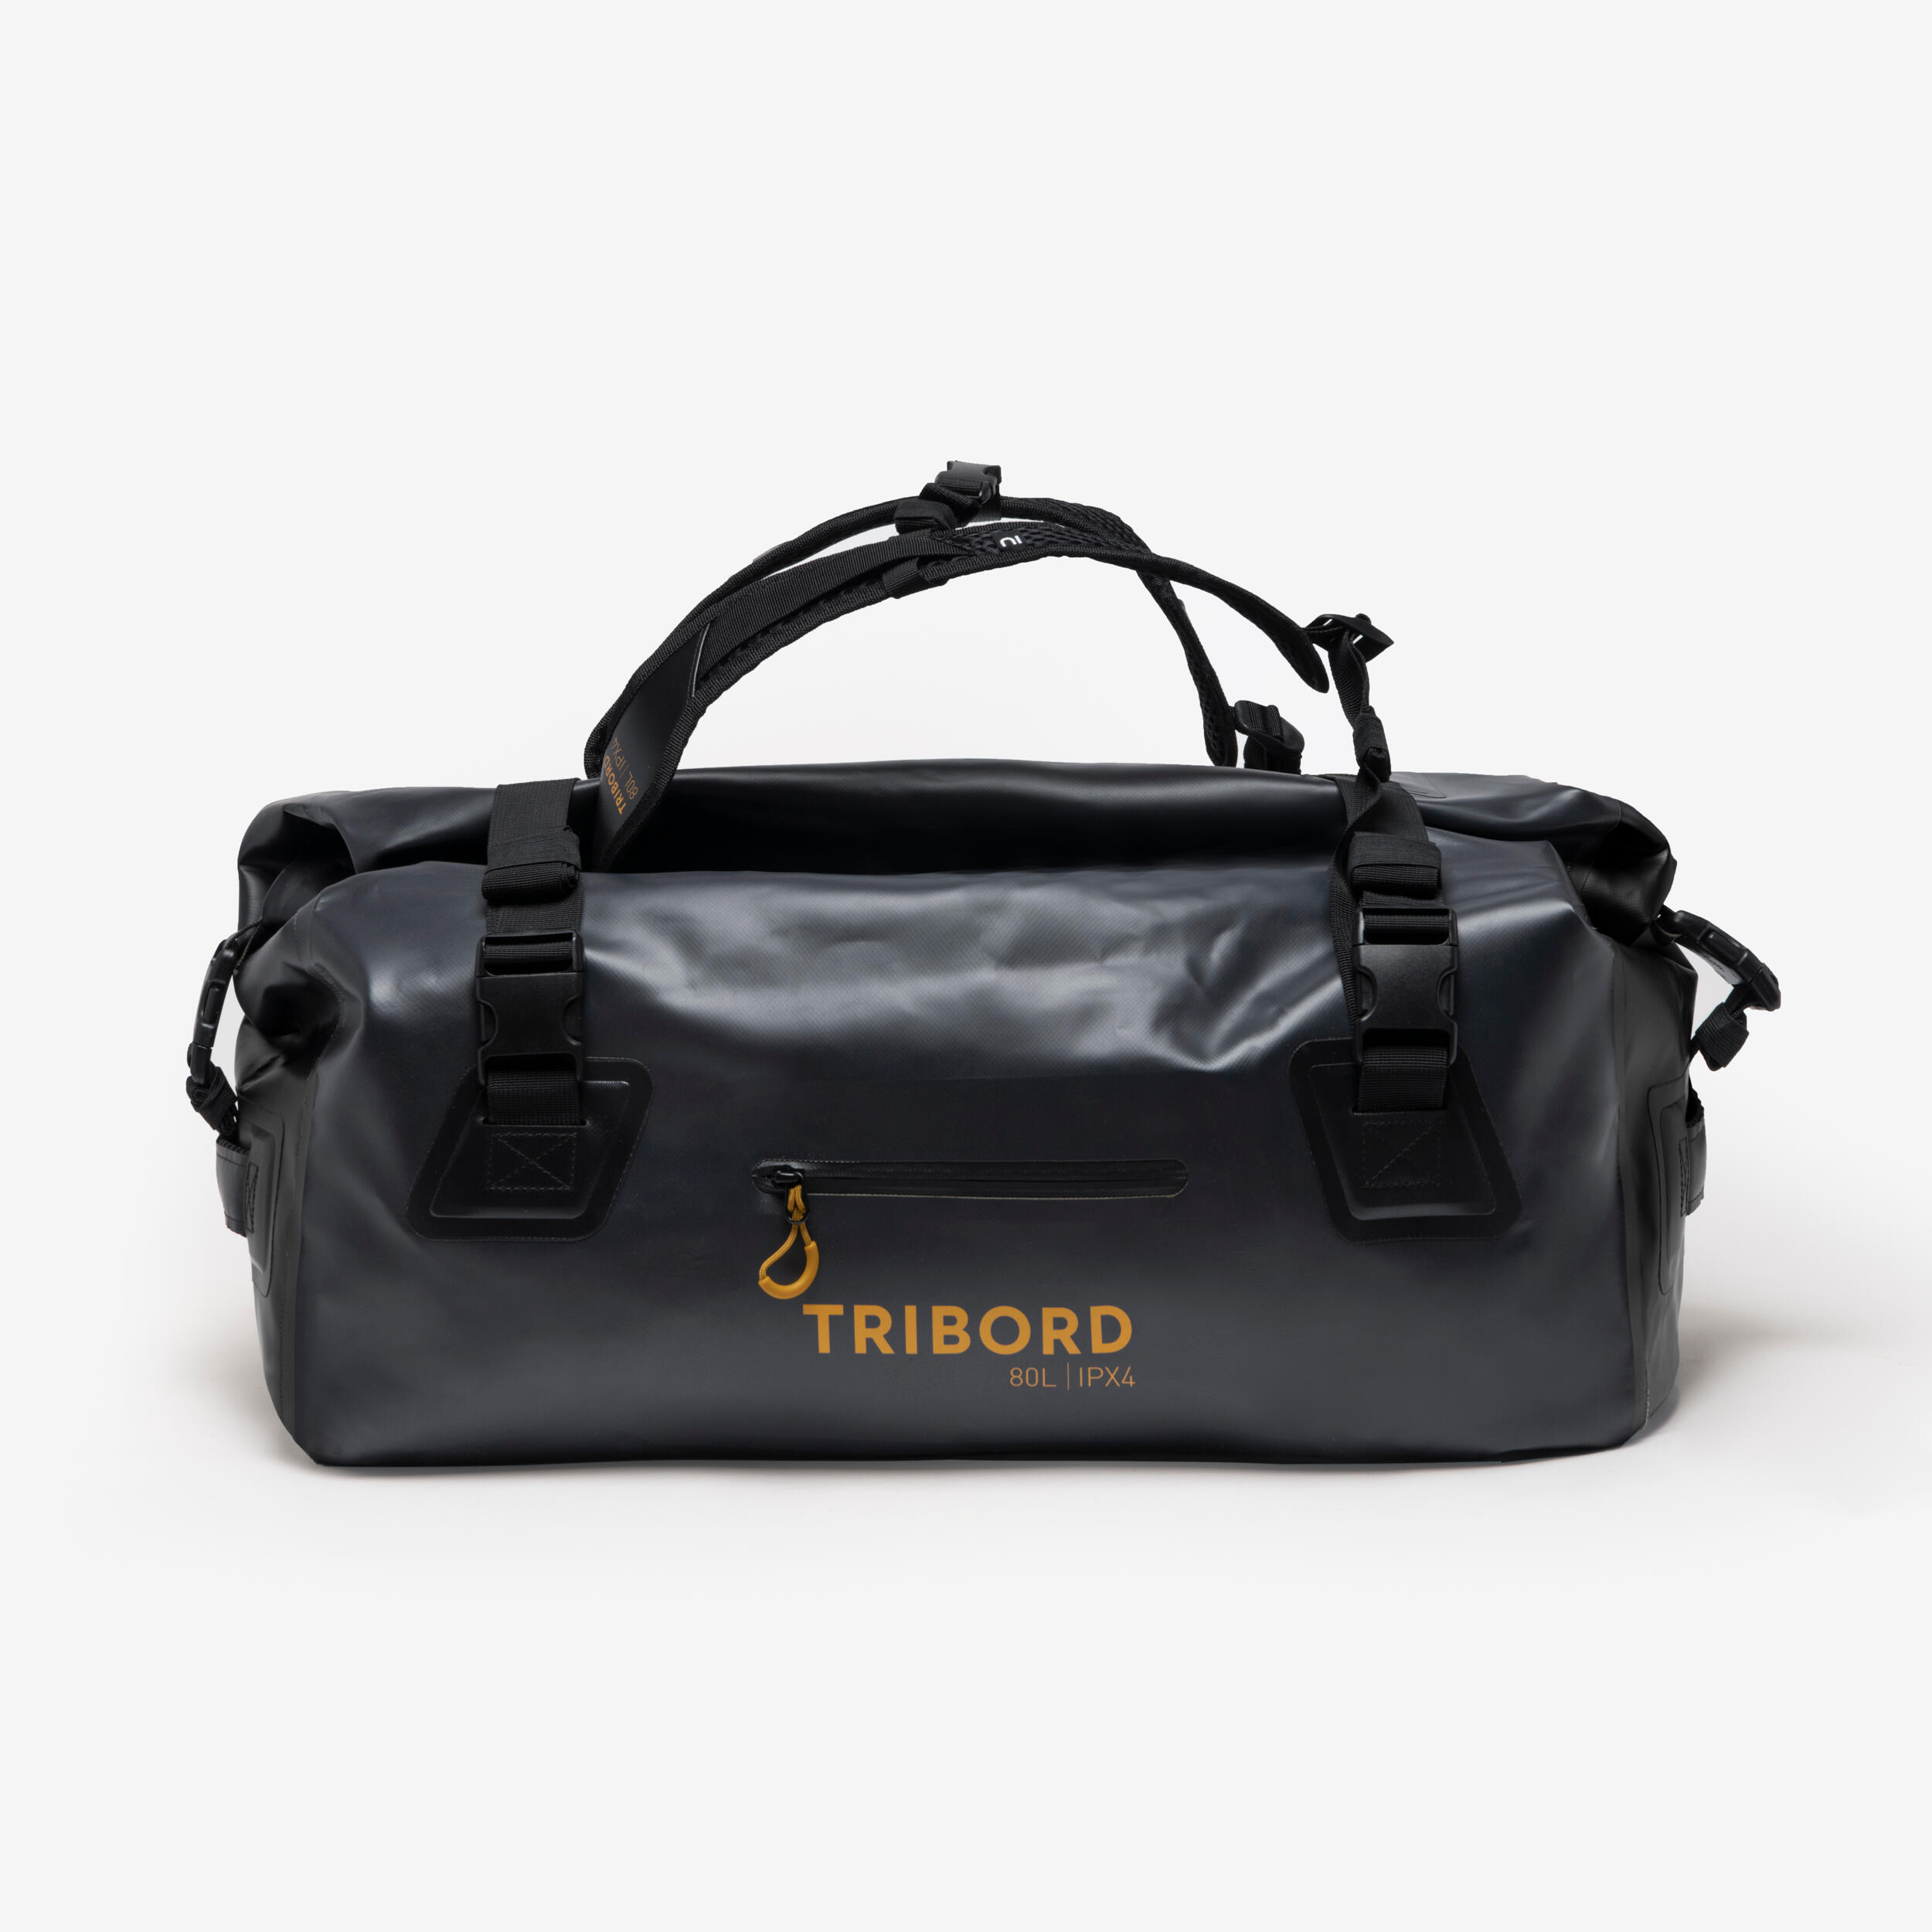 TRIBORD Waterproof duffle bag - 80 L travel bag Anthracite black